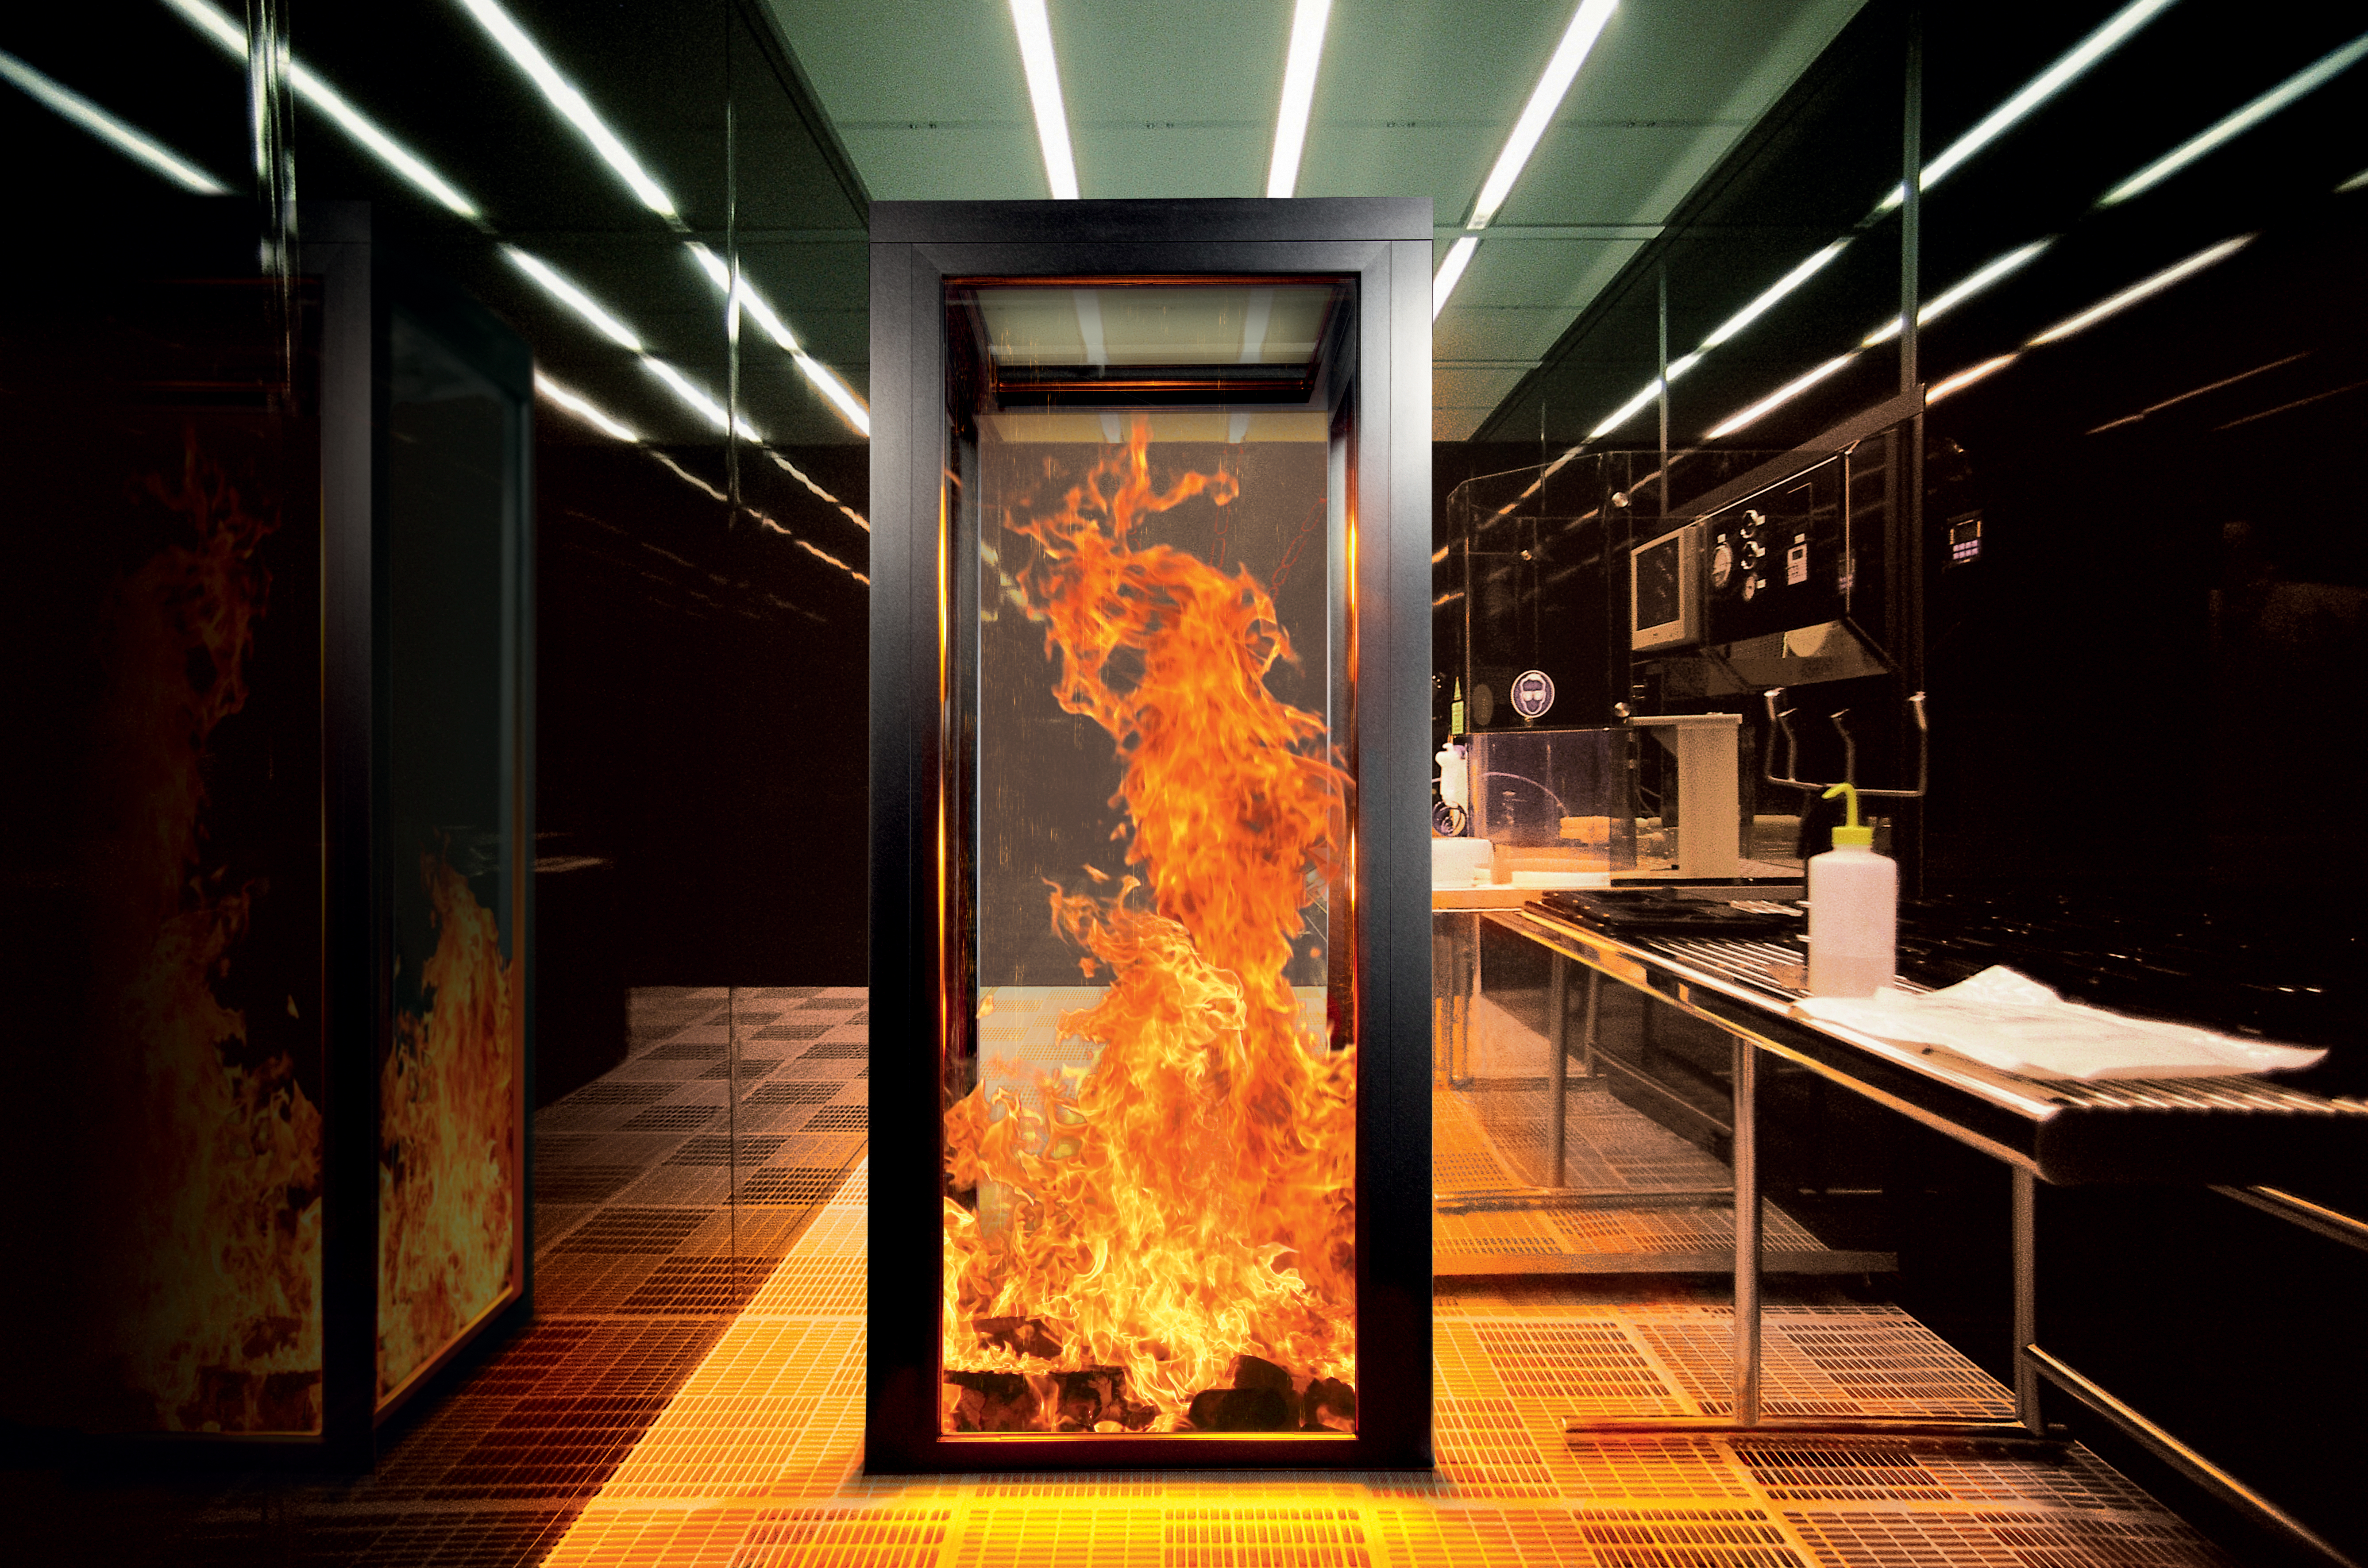 What distinguishes a fire door from a standard door?